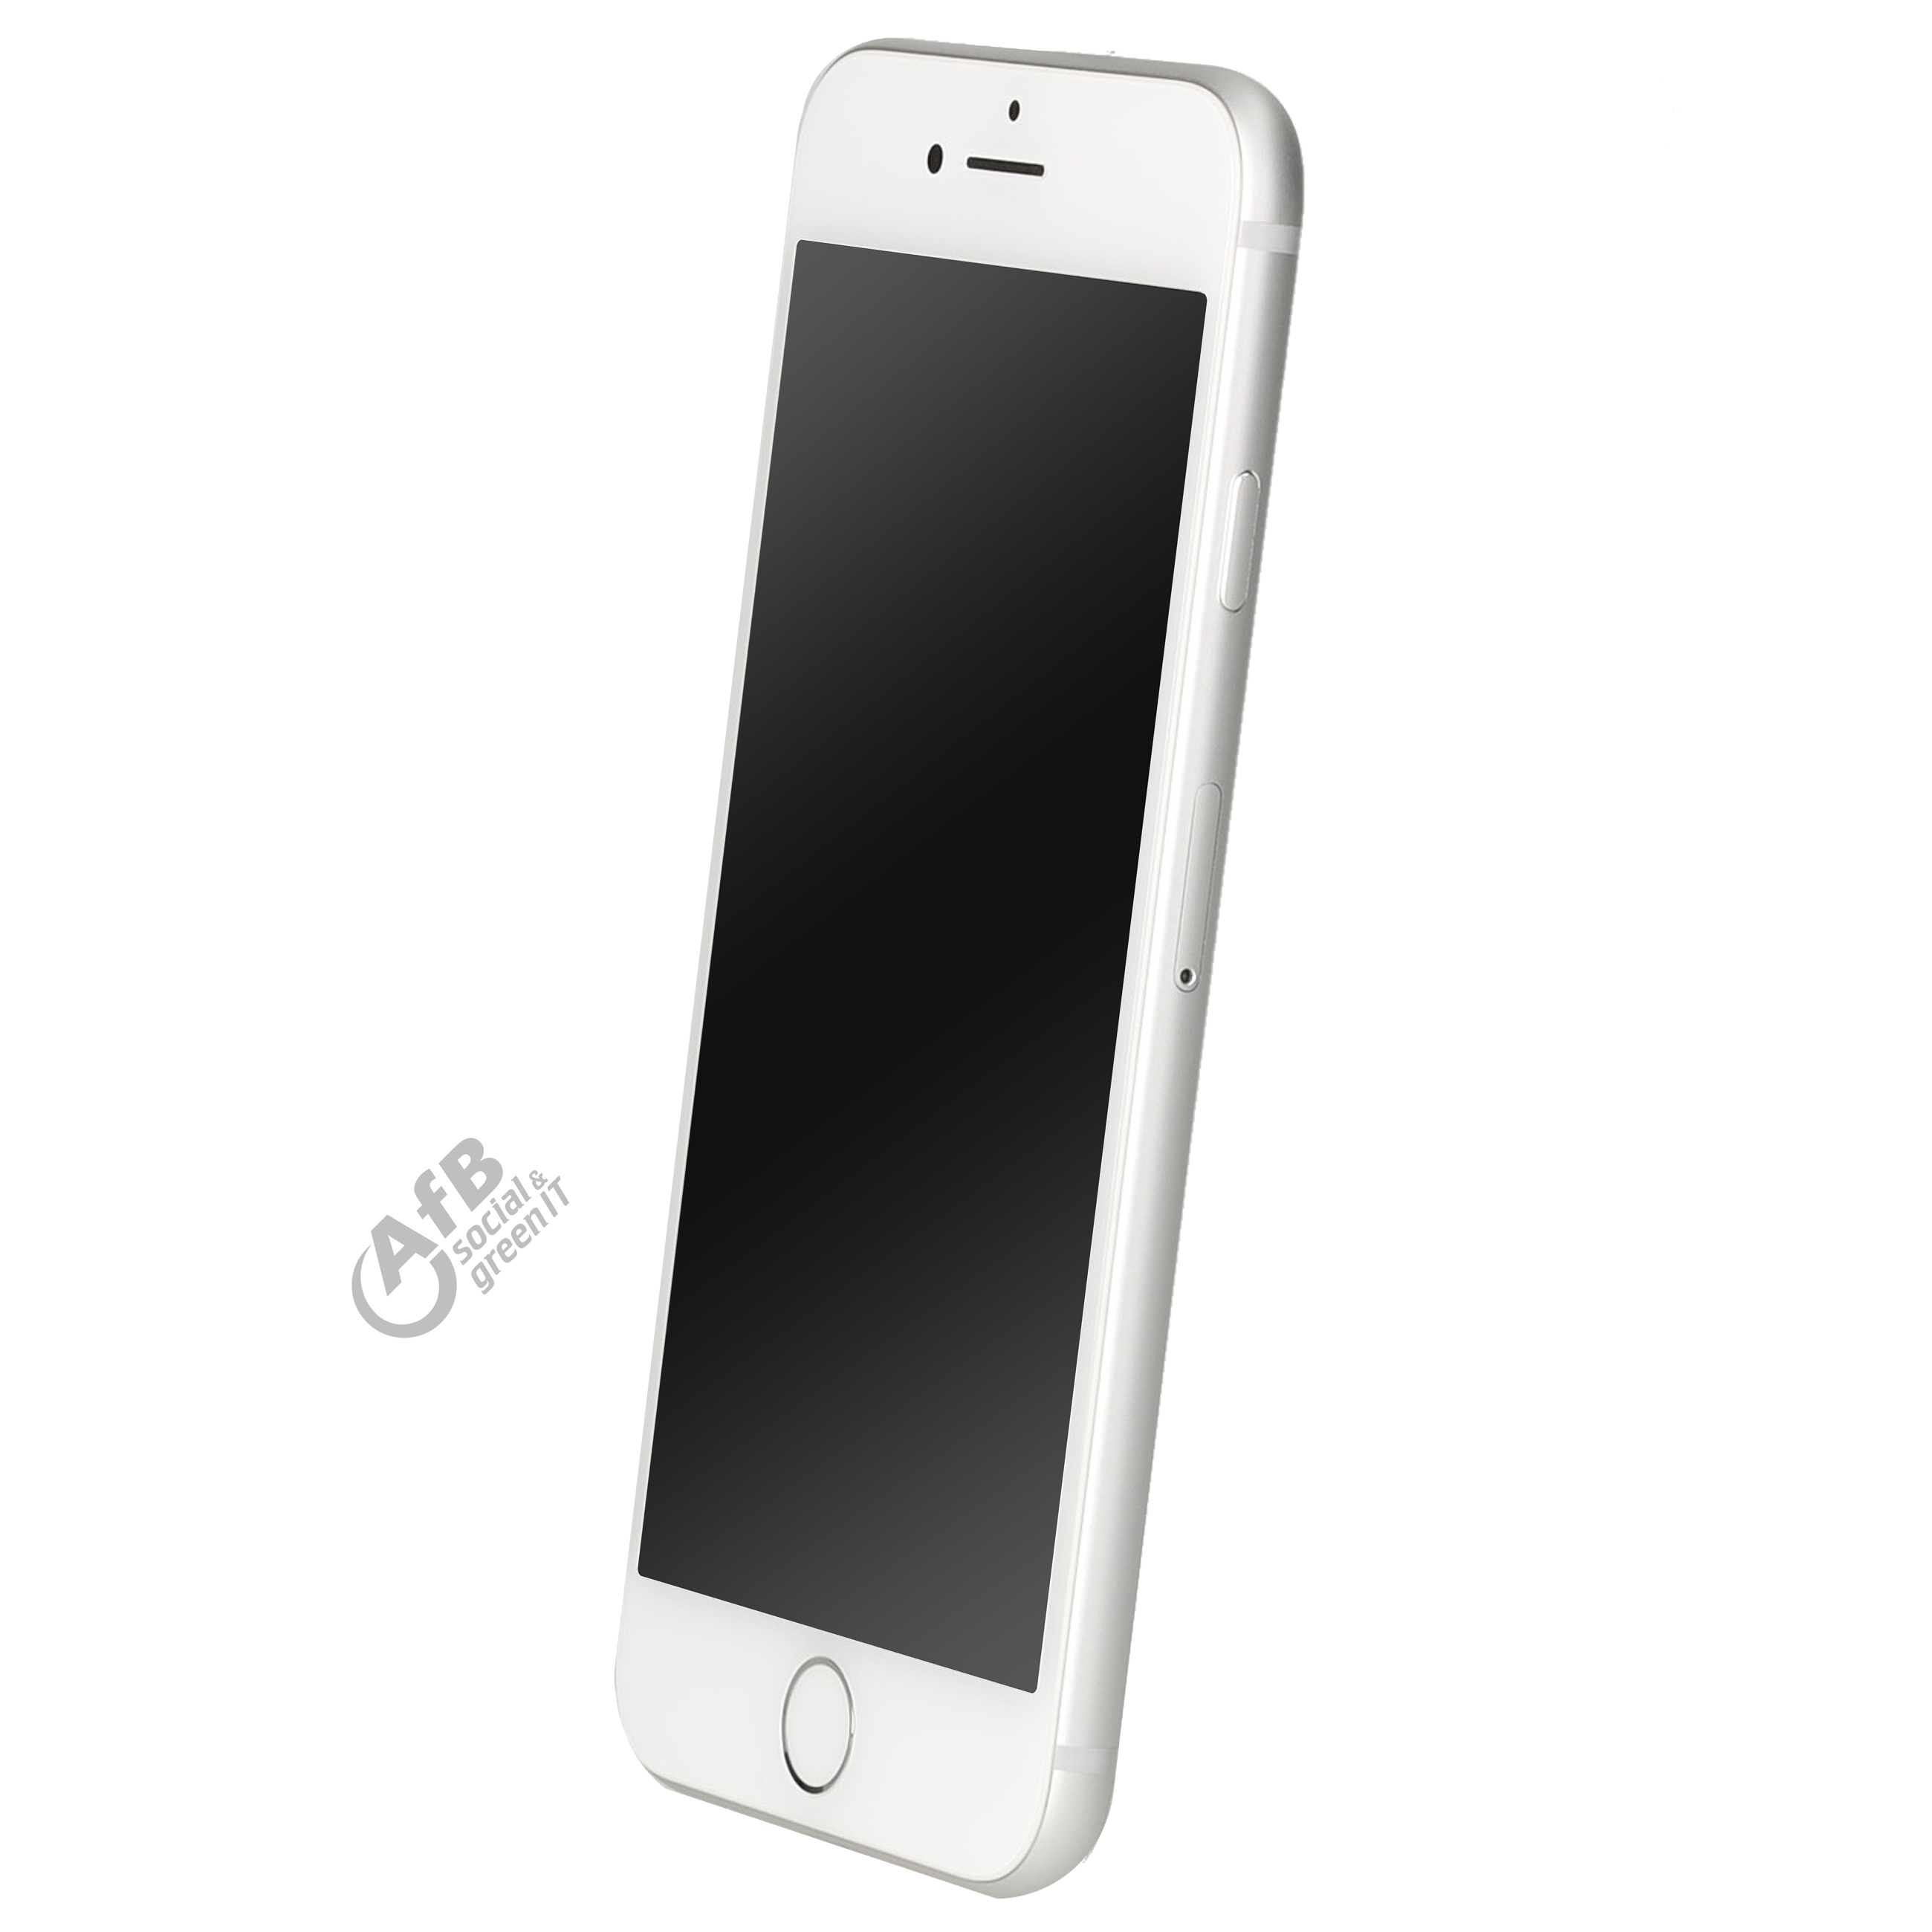 Apple iPhone 8 - 64 GB - Silver - Single-SIM